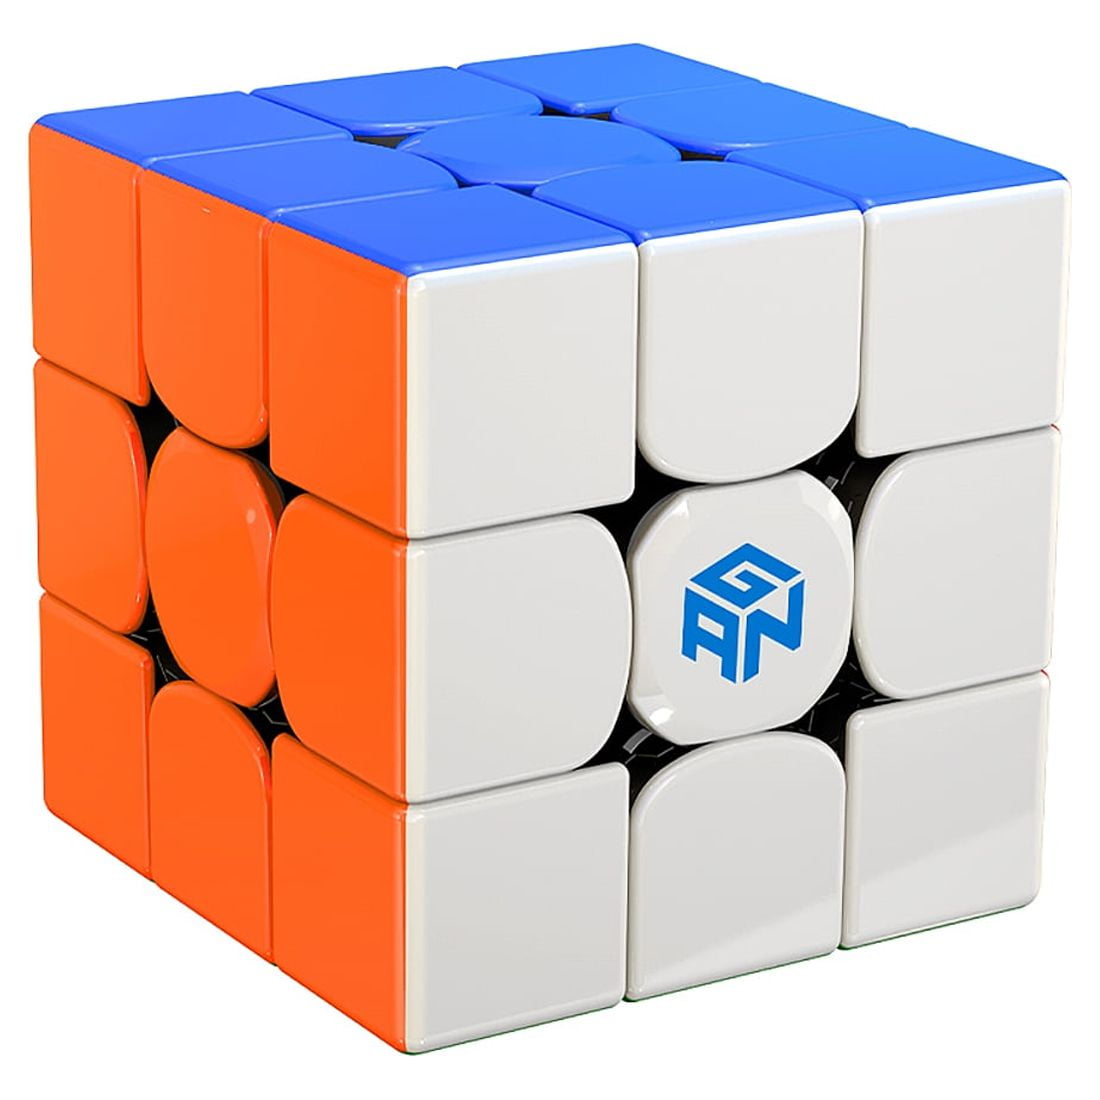 GAN 356 R S, 3x3 Speed Cube Puzzle Cube Magic GAN Cube, Stickerless